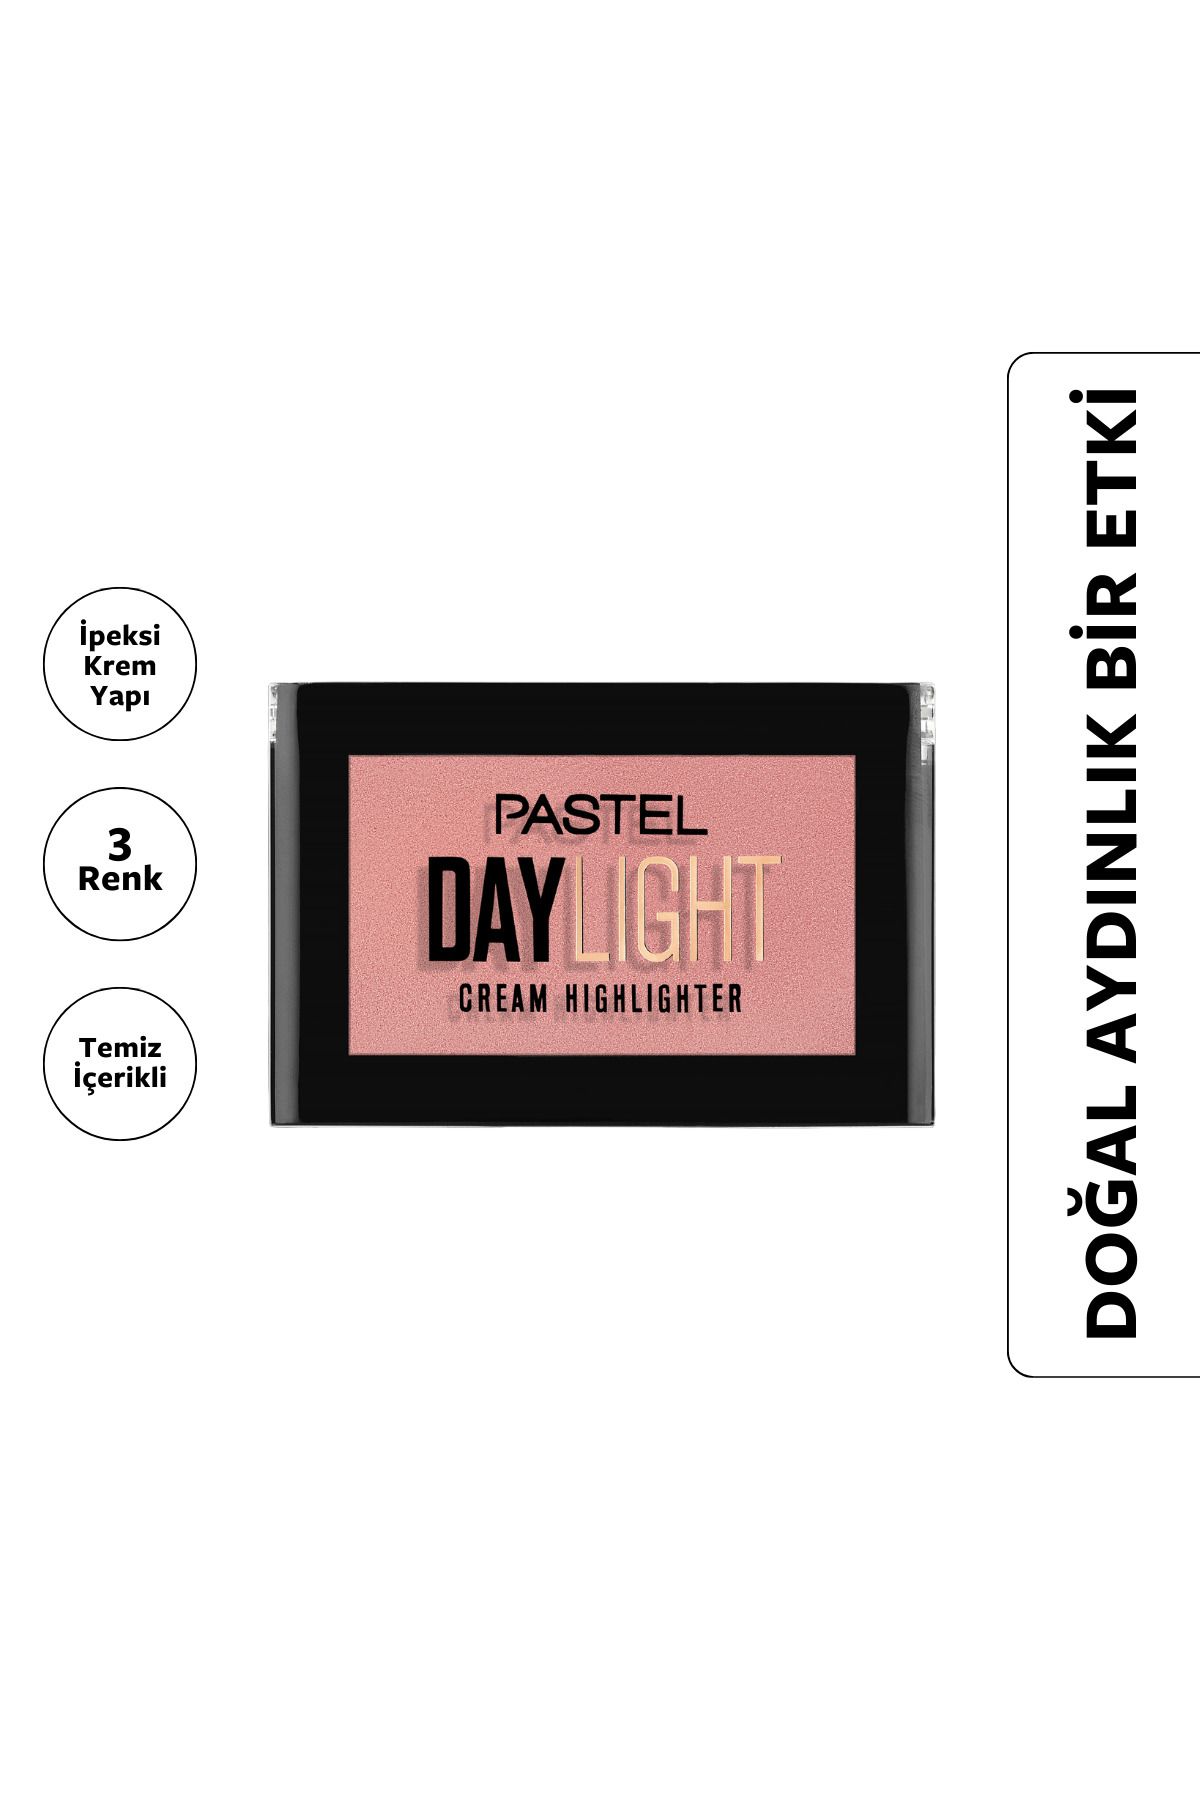 Pastel Profashion Daylight Highlighter No:13